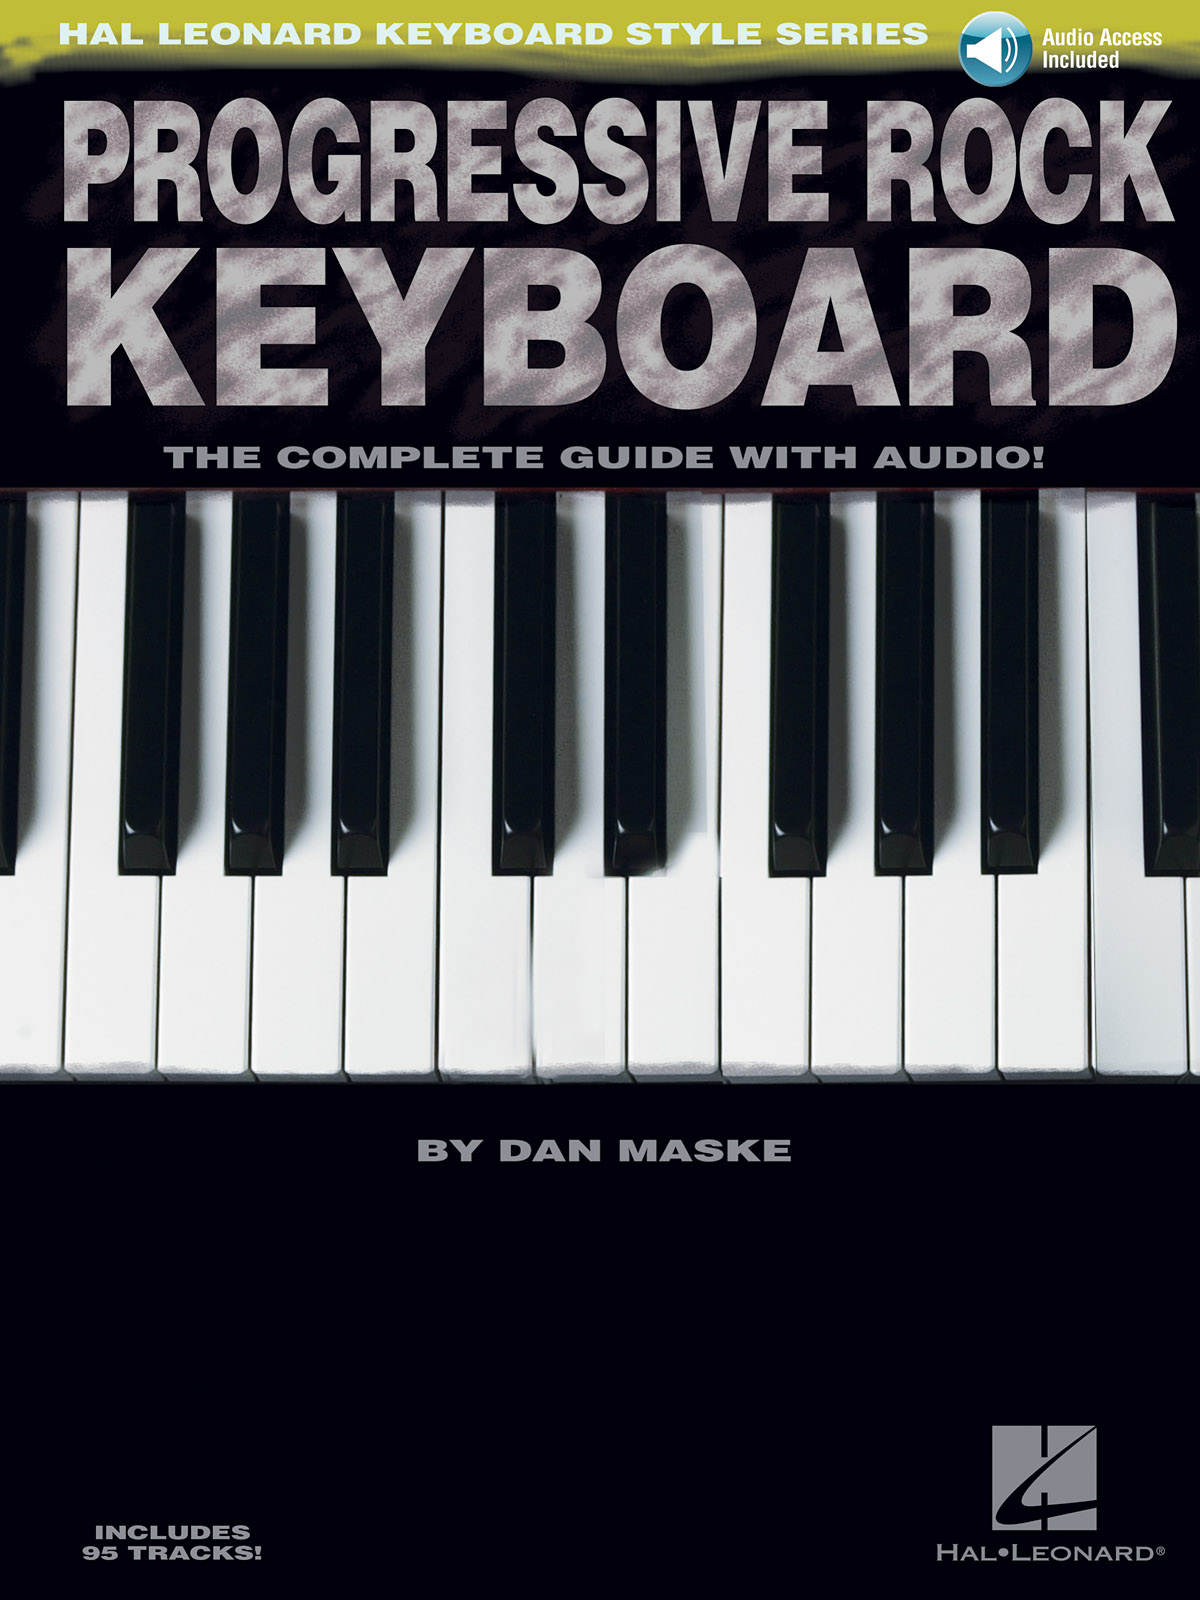 Progressive Rock Keyboard - The Complete Guide with CD! - pro keyboard